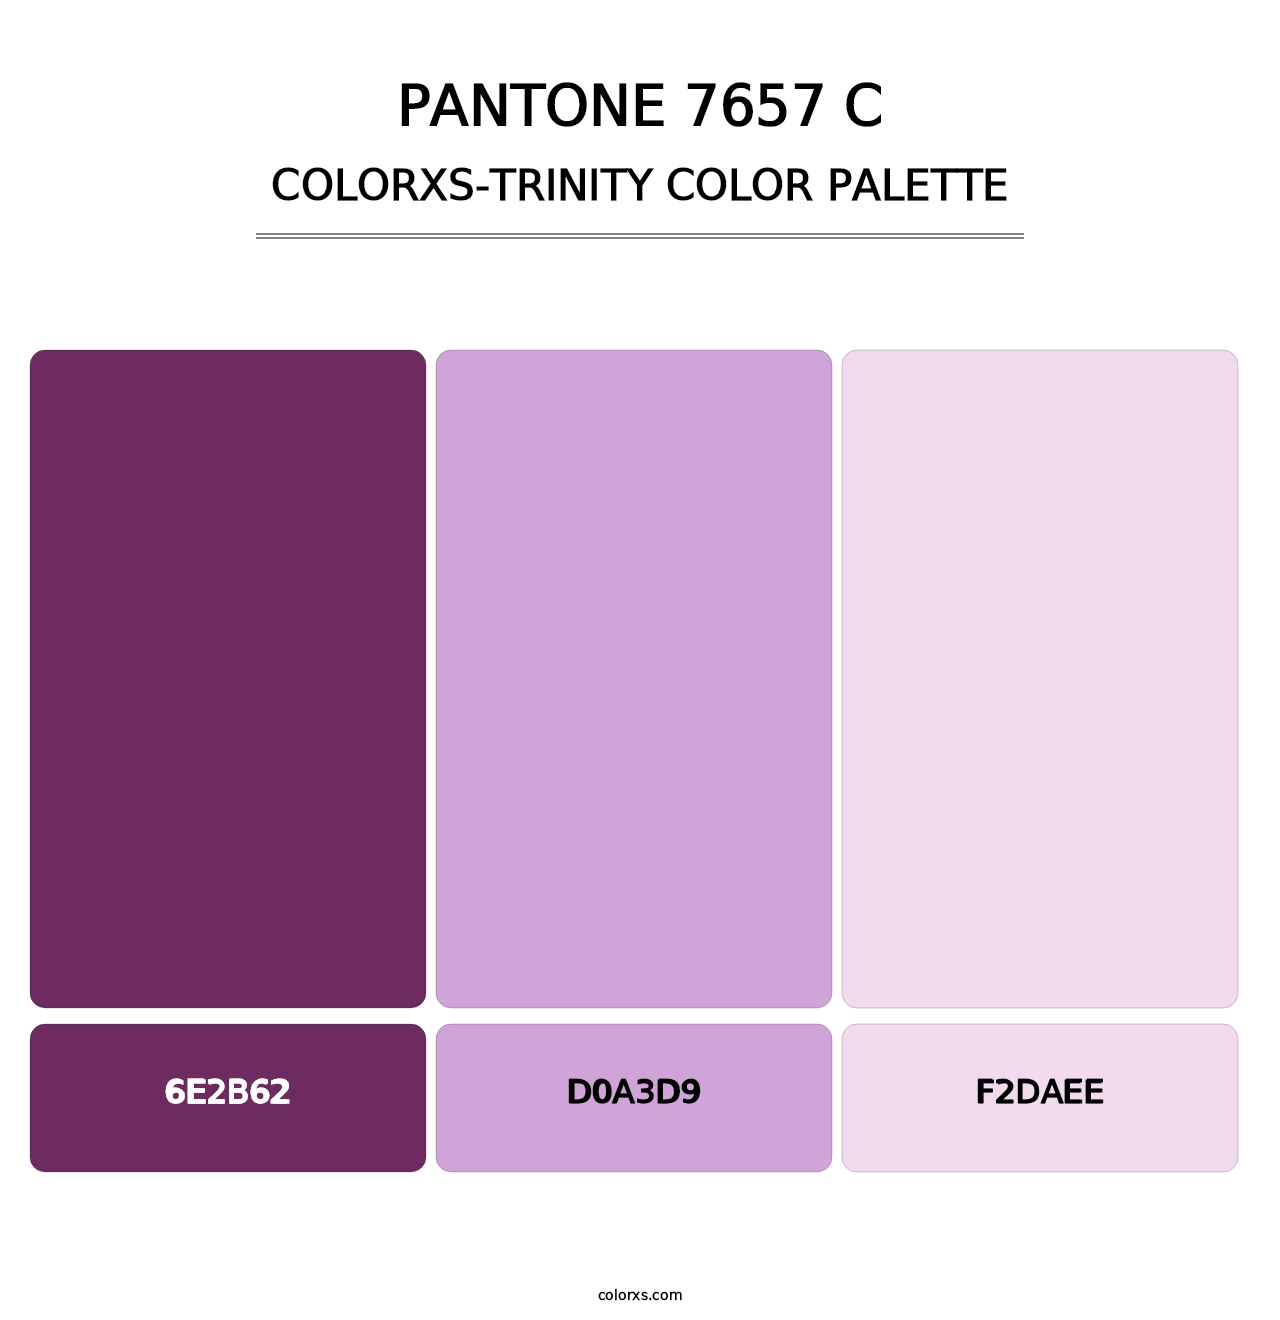 PANTONE 7657 C - Colorxs Trinity Palette